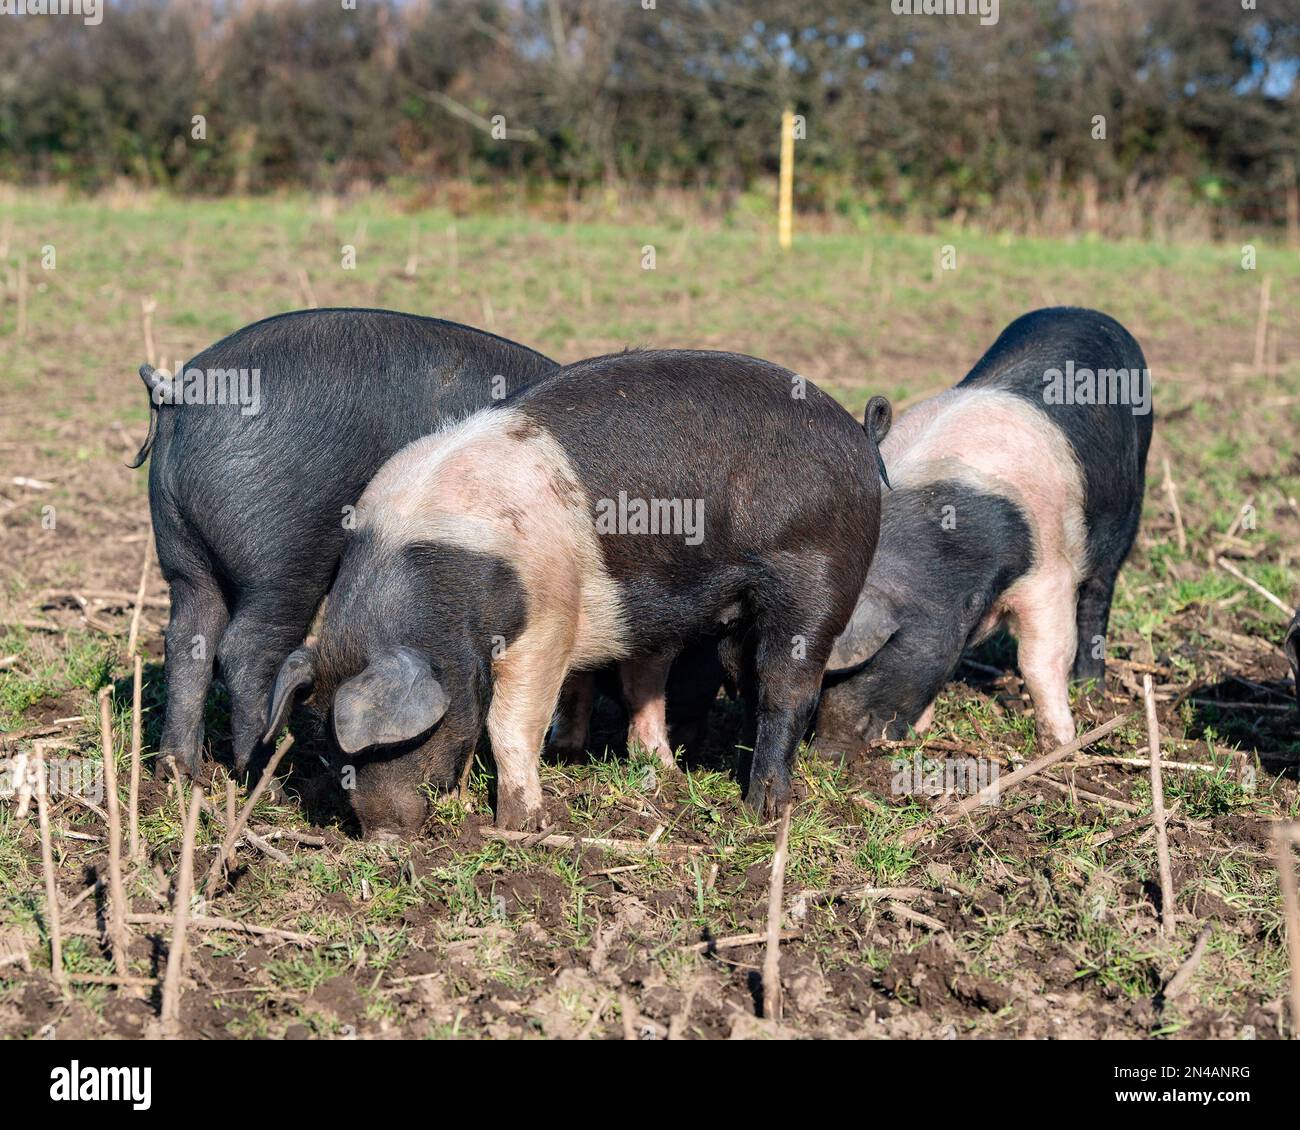 saddleback weaner pigs outdoors Stock Photo